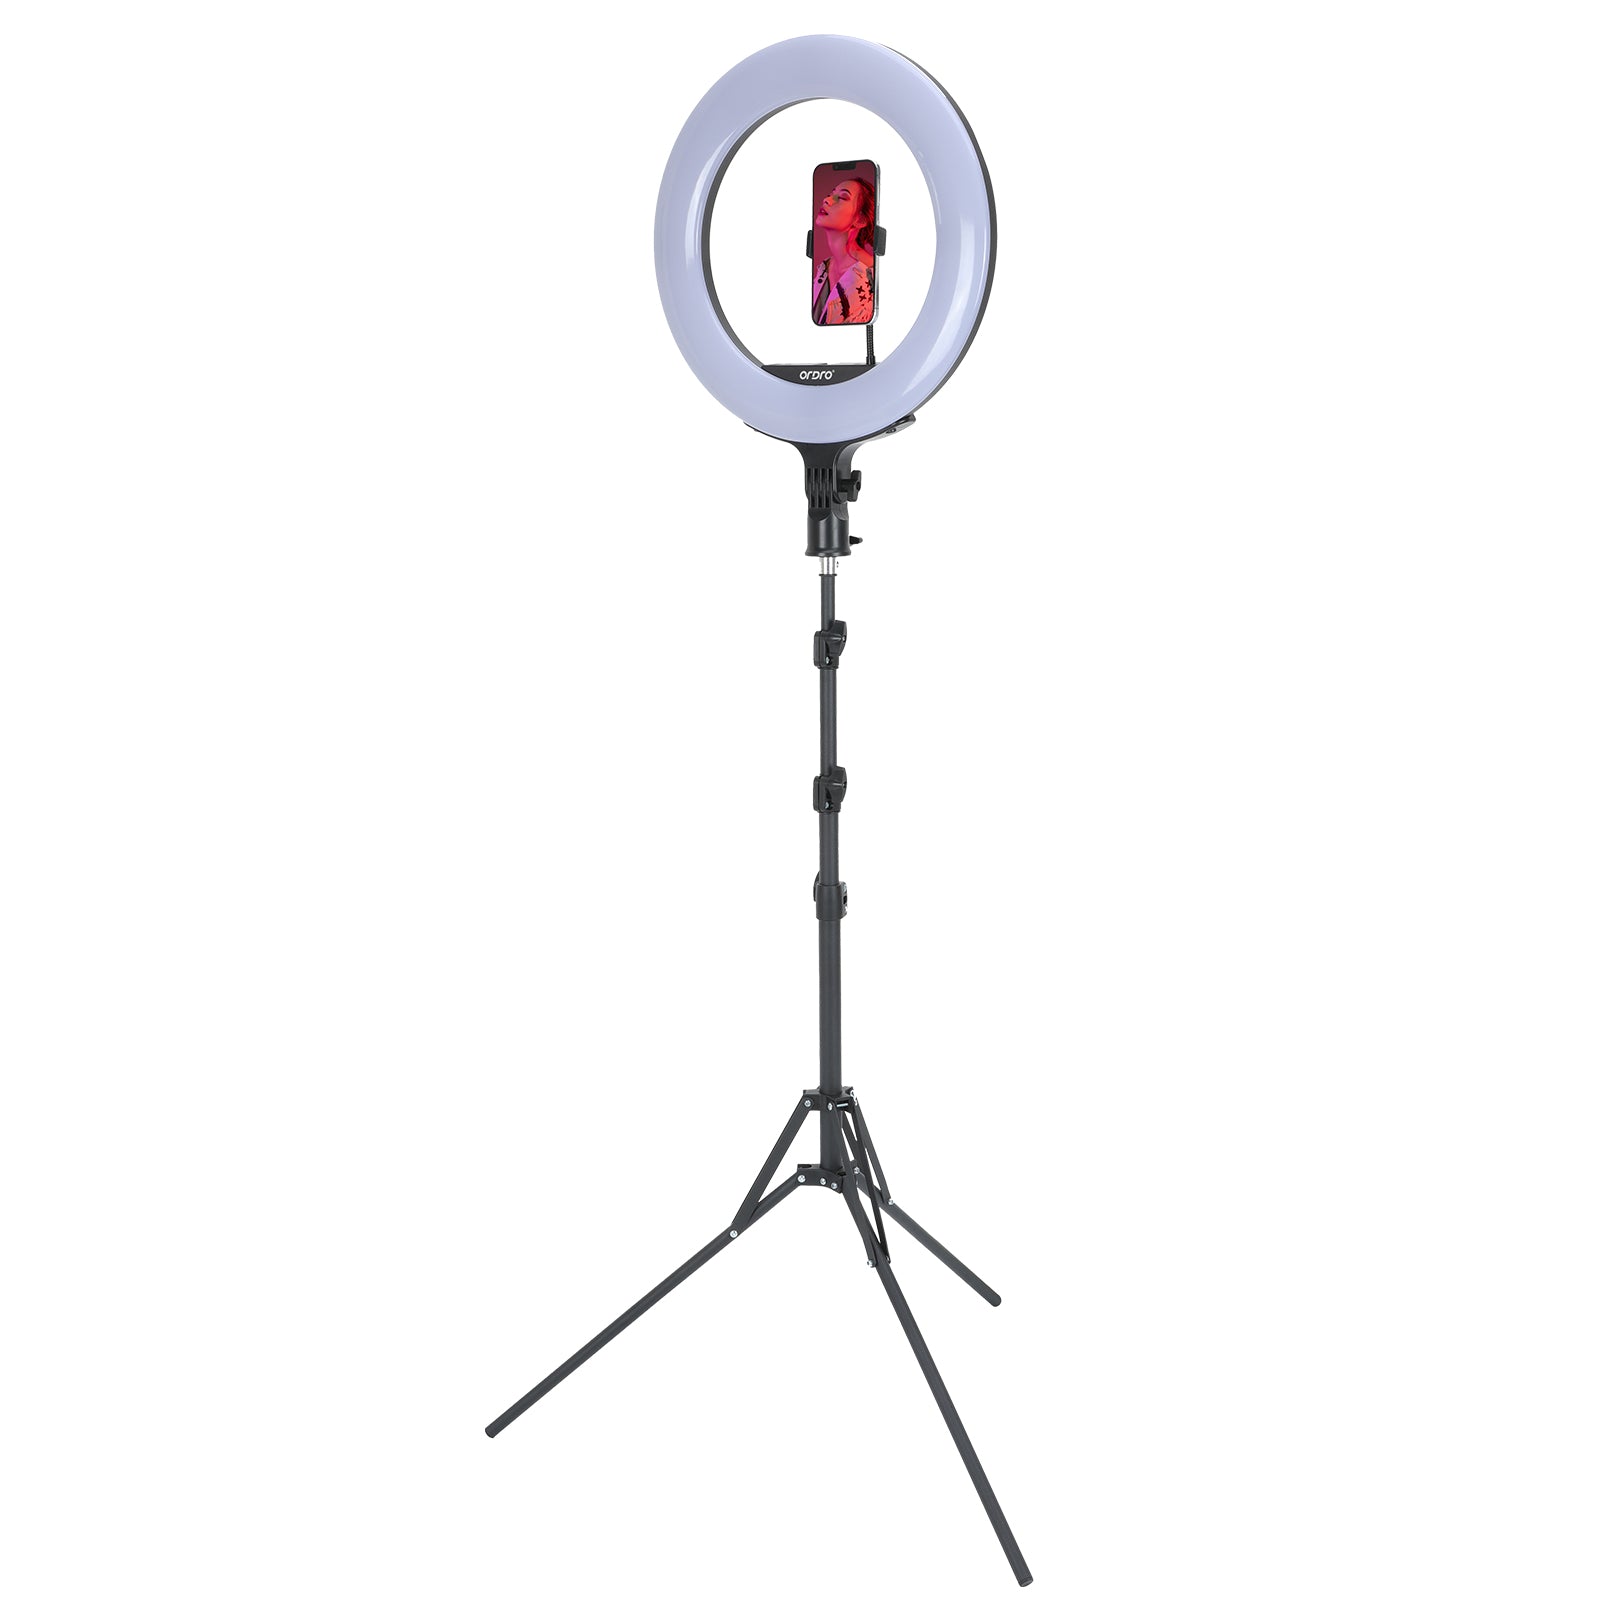 Ordro SL-160 RGB Ring Light 16 inch with Tripod Stand (2600-10000K) for Phone Camera iPad Selfie Live Stream YouTube TikTok Video Shooting Best Lighting Atmosphere Ringlight